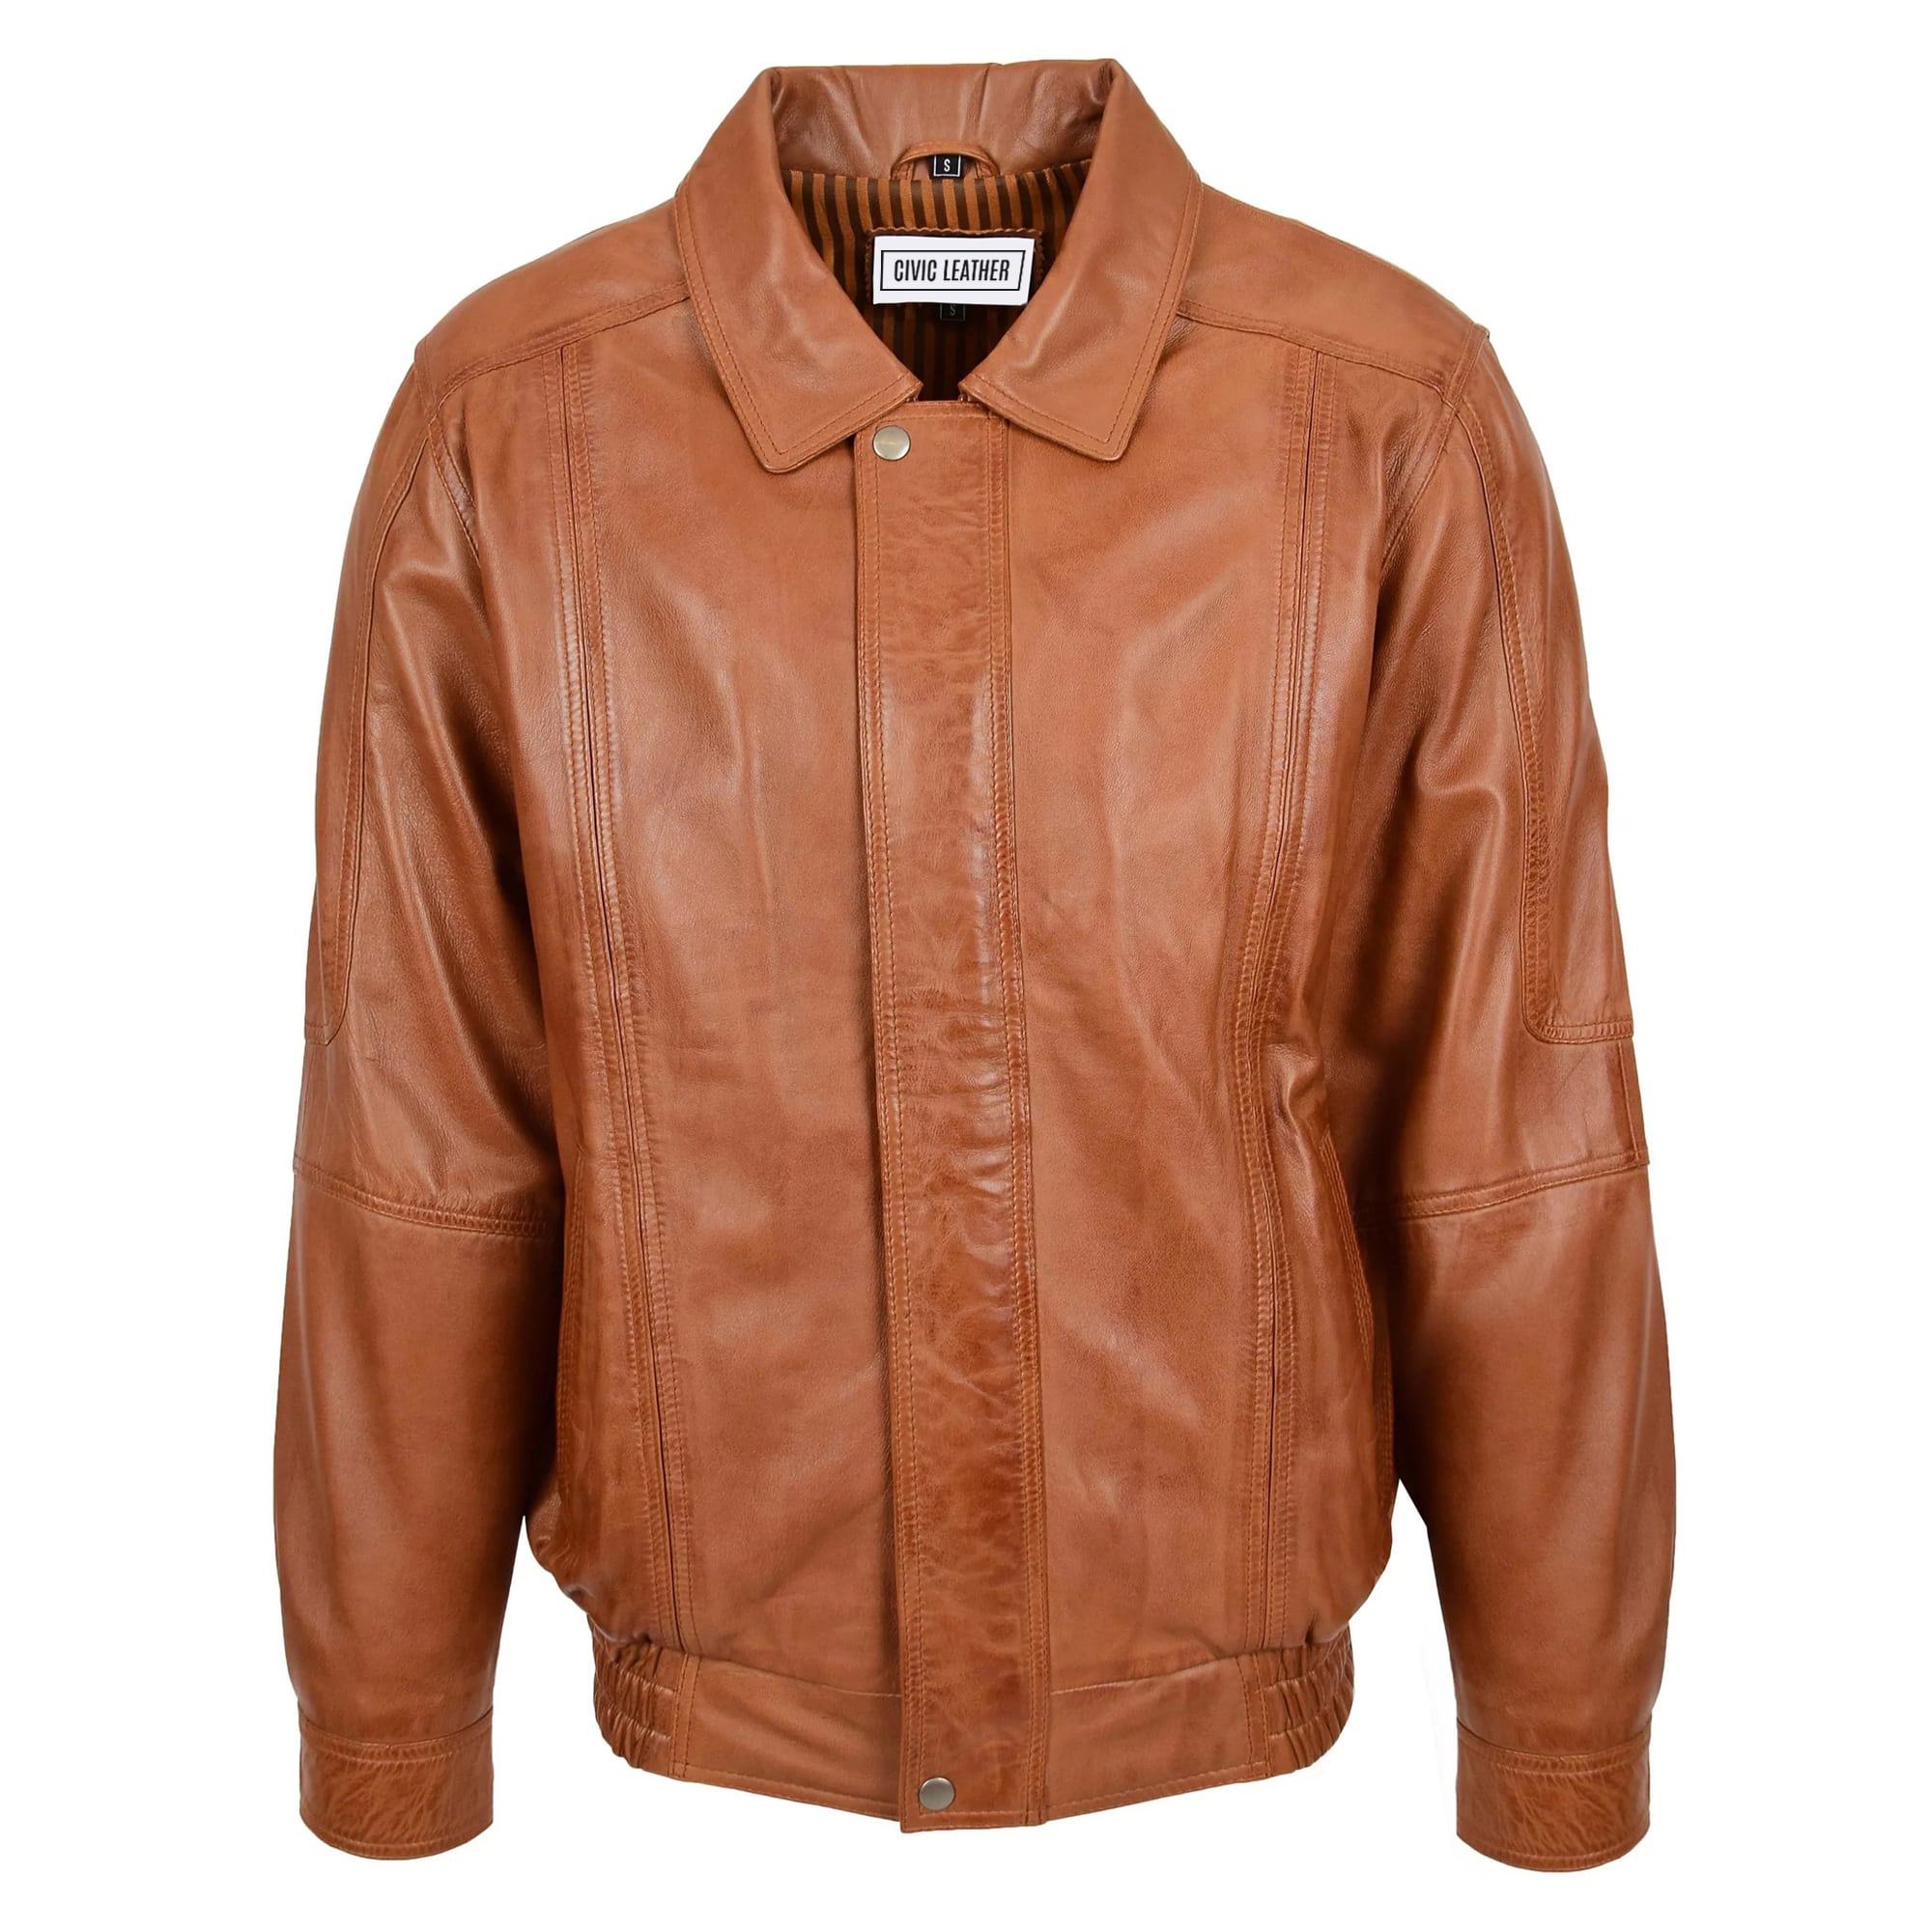 Classic Leather Bomber Jacket Jim Tan